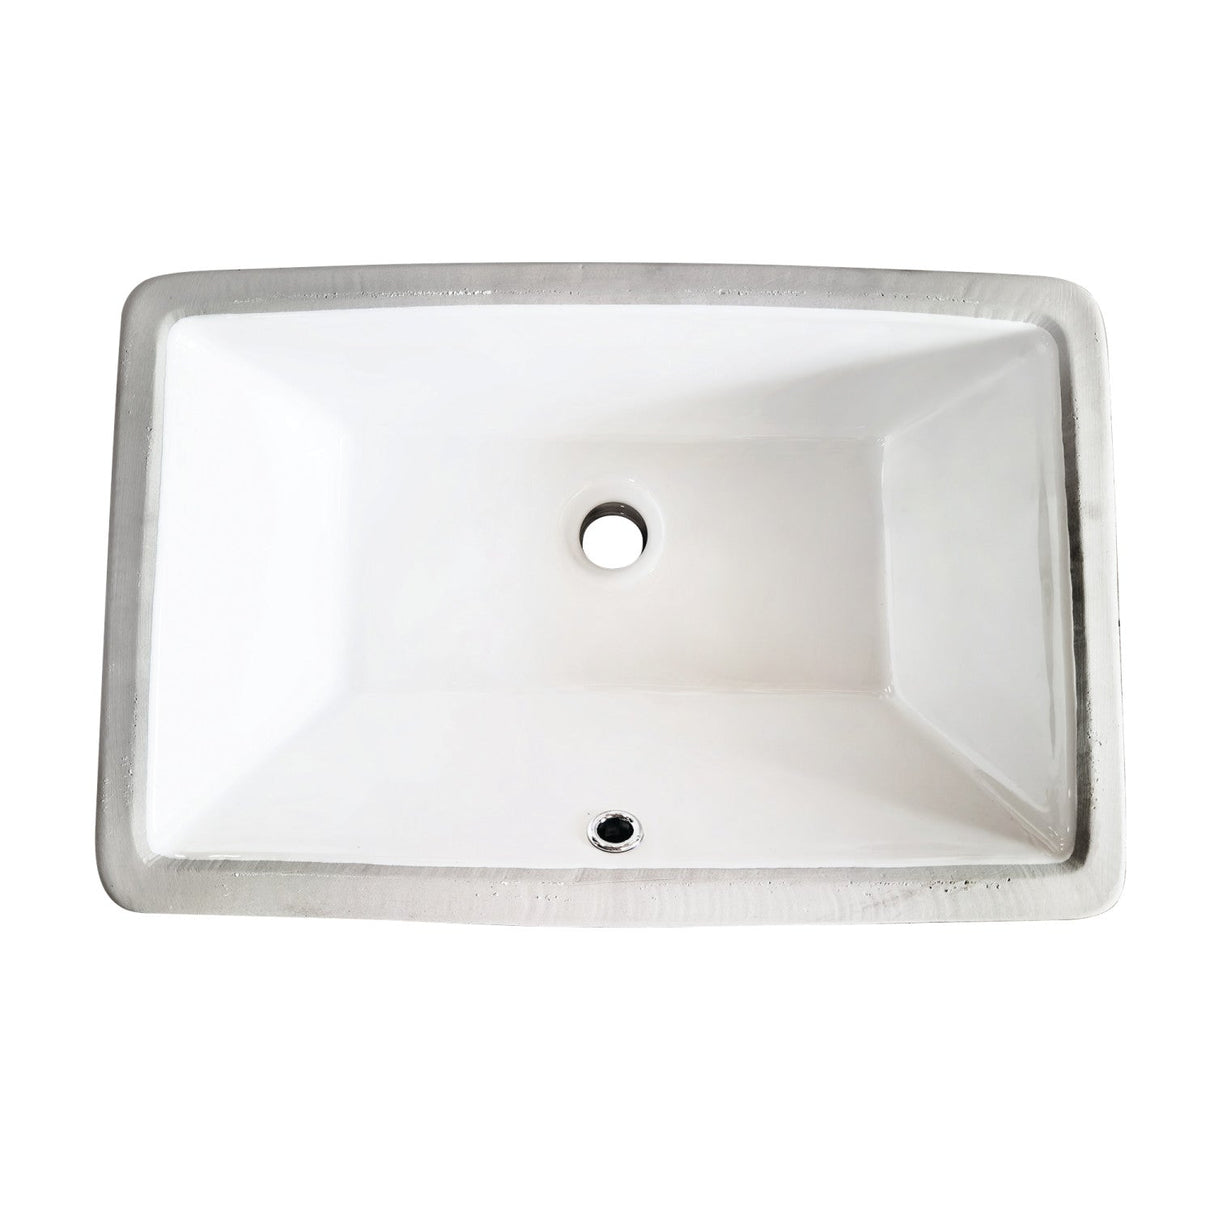 Chancellery LB21147 21-Inch Ceramic Undermount Bathroom Sink, White